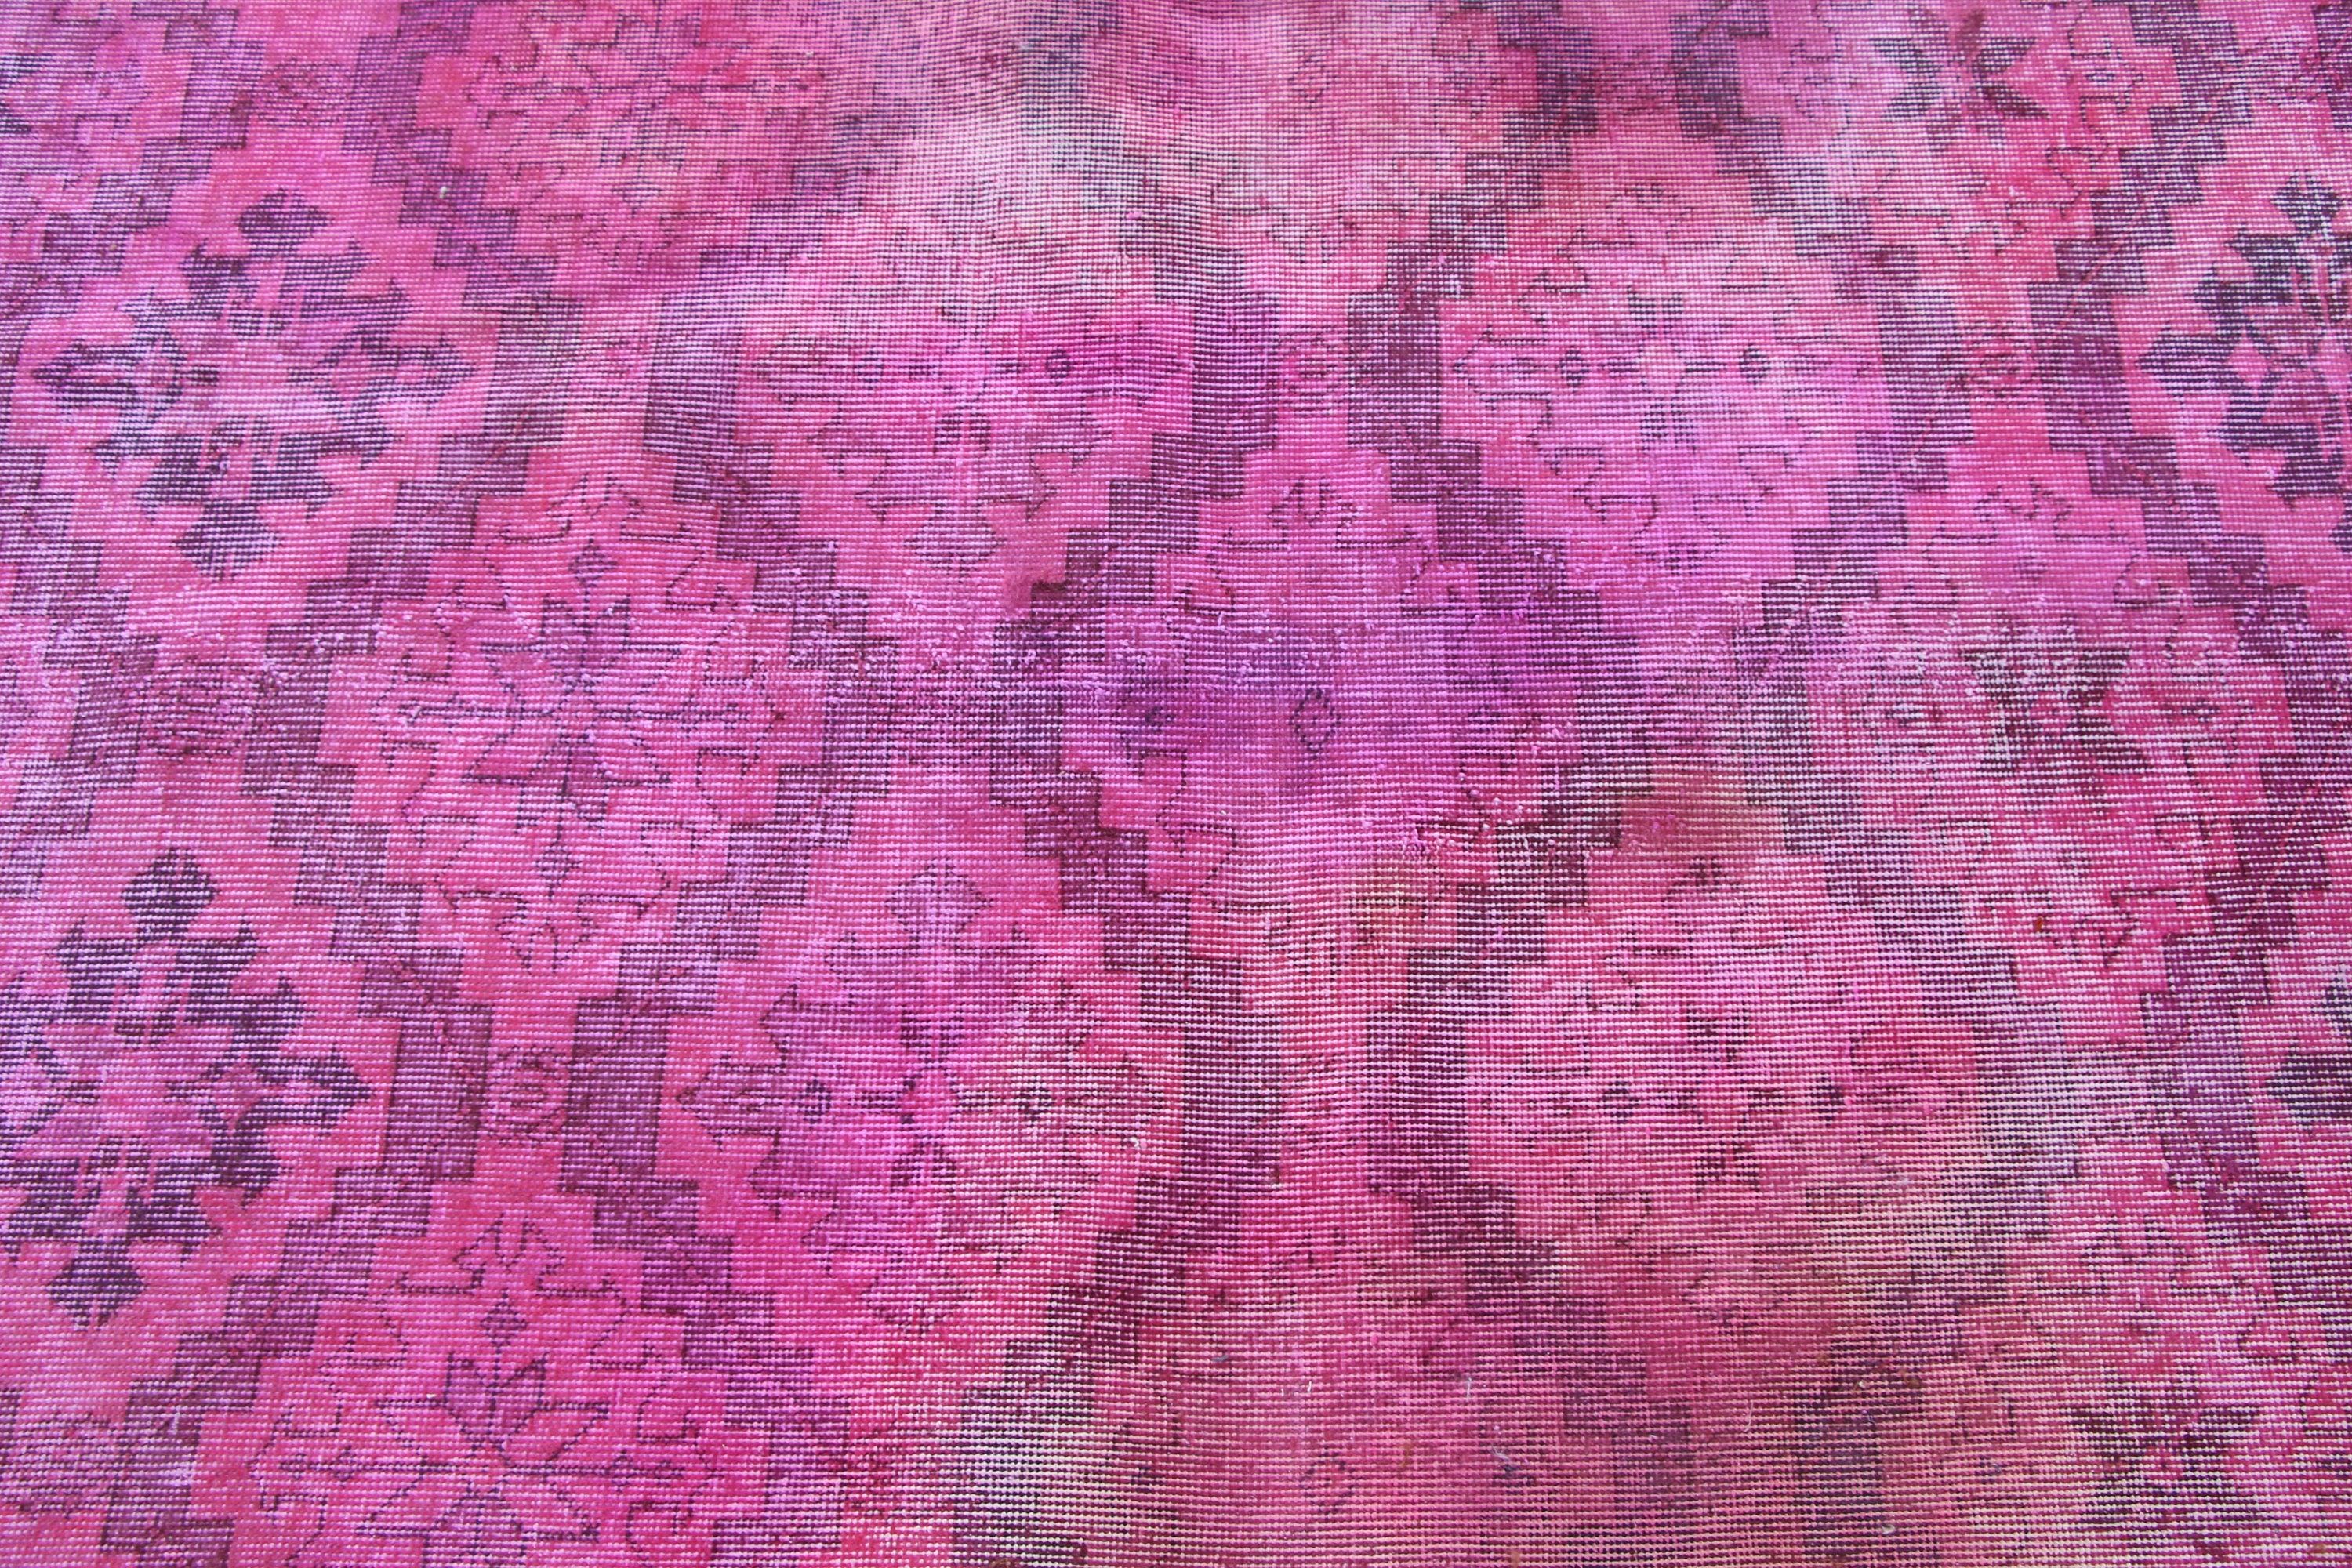 Pink Kitchen Rug, Art Rug, Turkish Rugs, Vintage Rug, Bedroom Rugs, Rugs for Entry, Oriental Rug, 3.5x6.3 ft Accent Rug, Vintage Decor Rugs